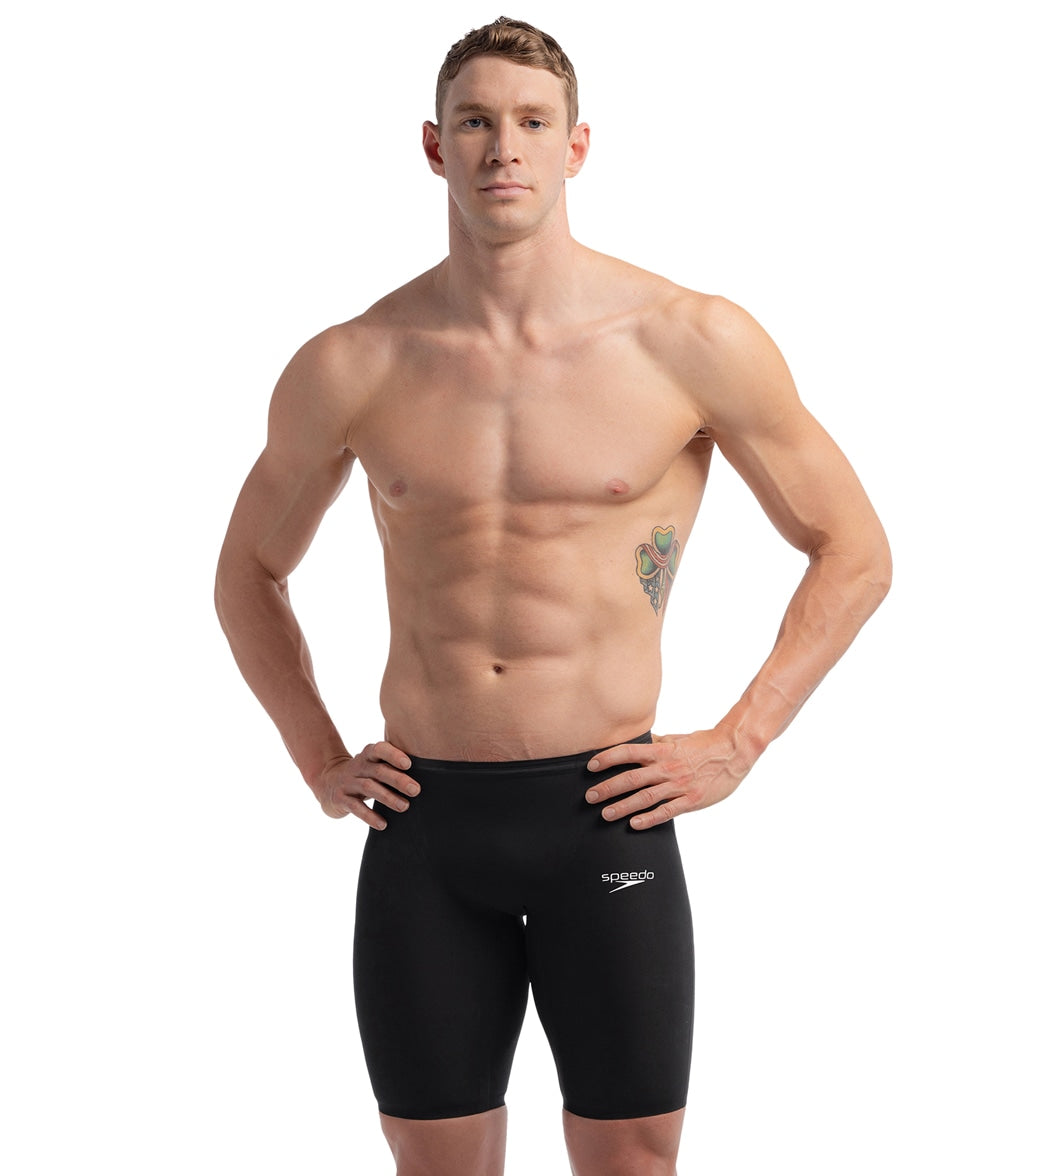 Speedo Men's LZR Valor 2.0 Jammer Tech Suit Swimsuit at SwimOutlet.com